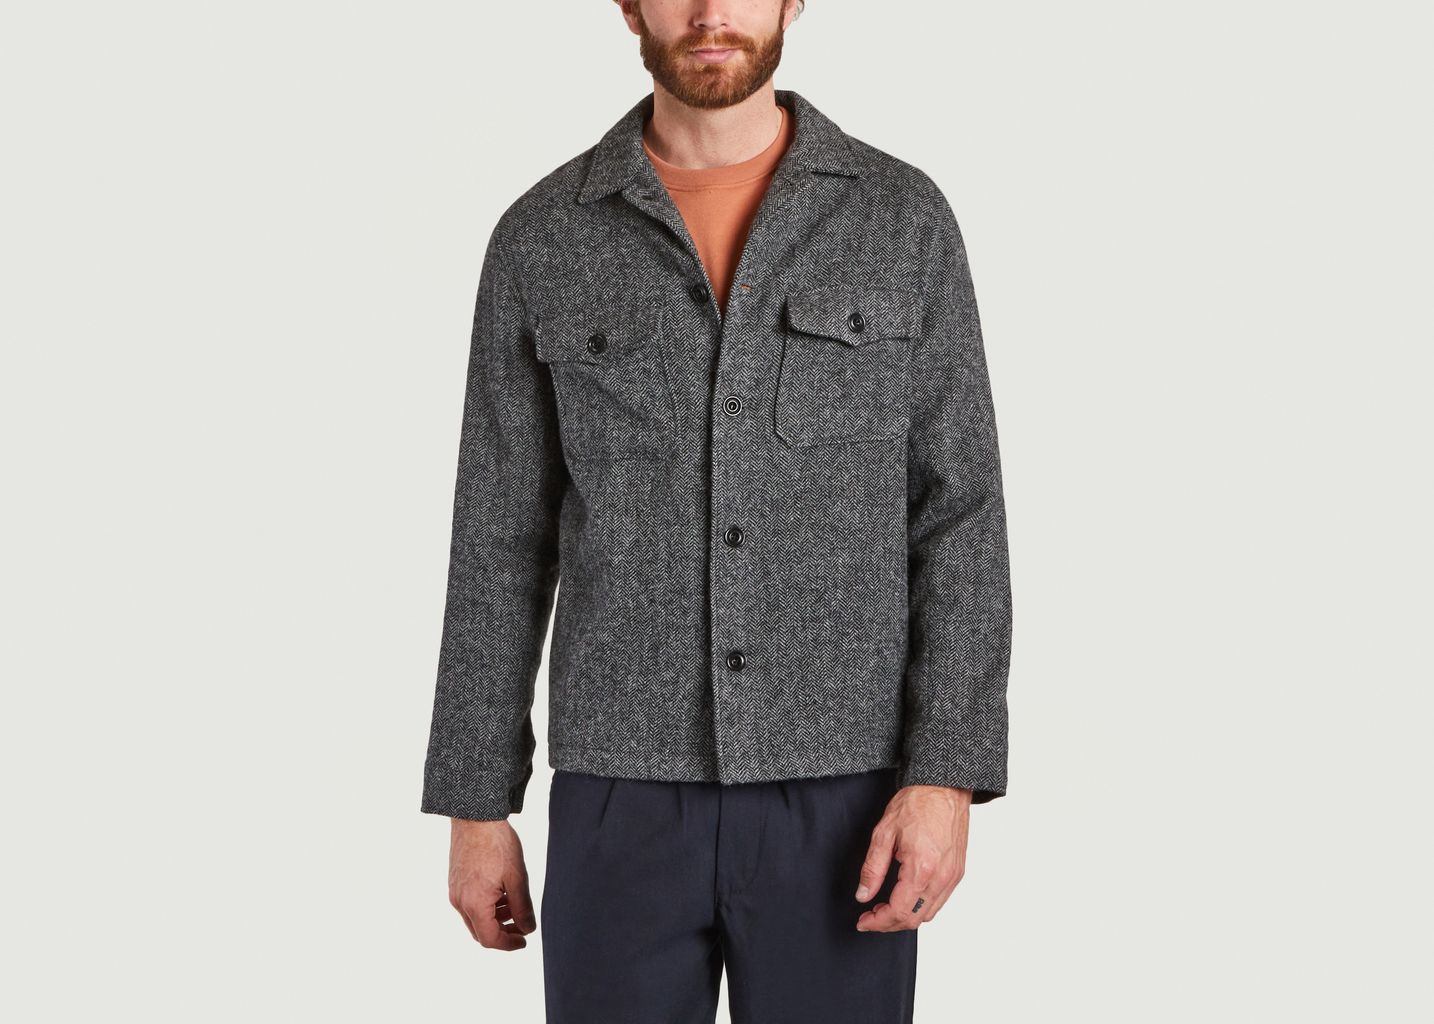  Day wool herringbone jacket - Hartford